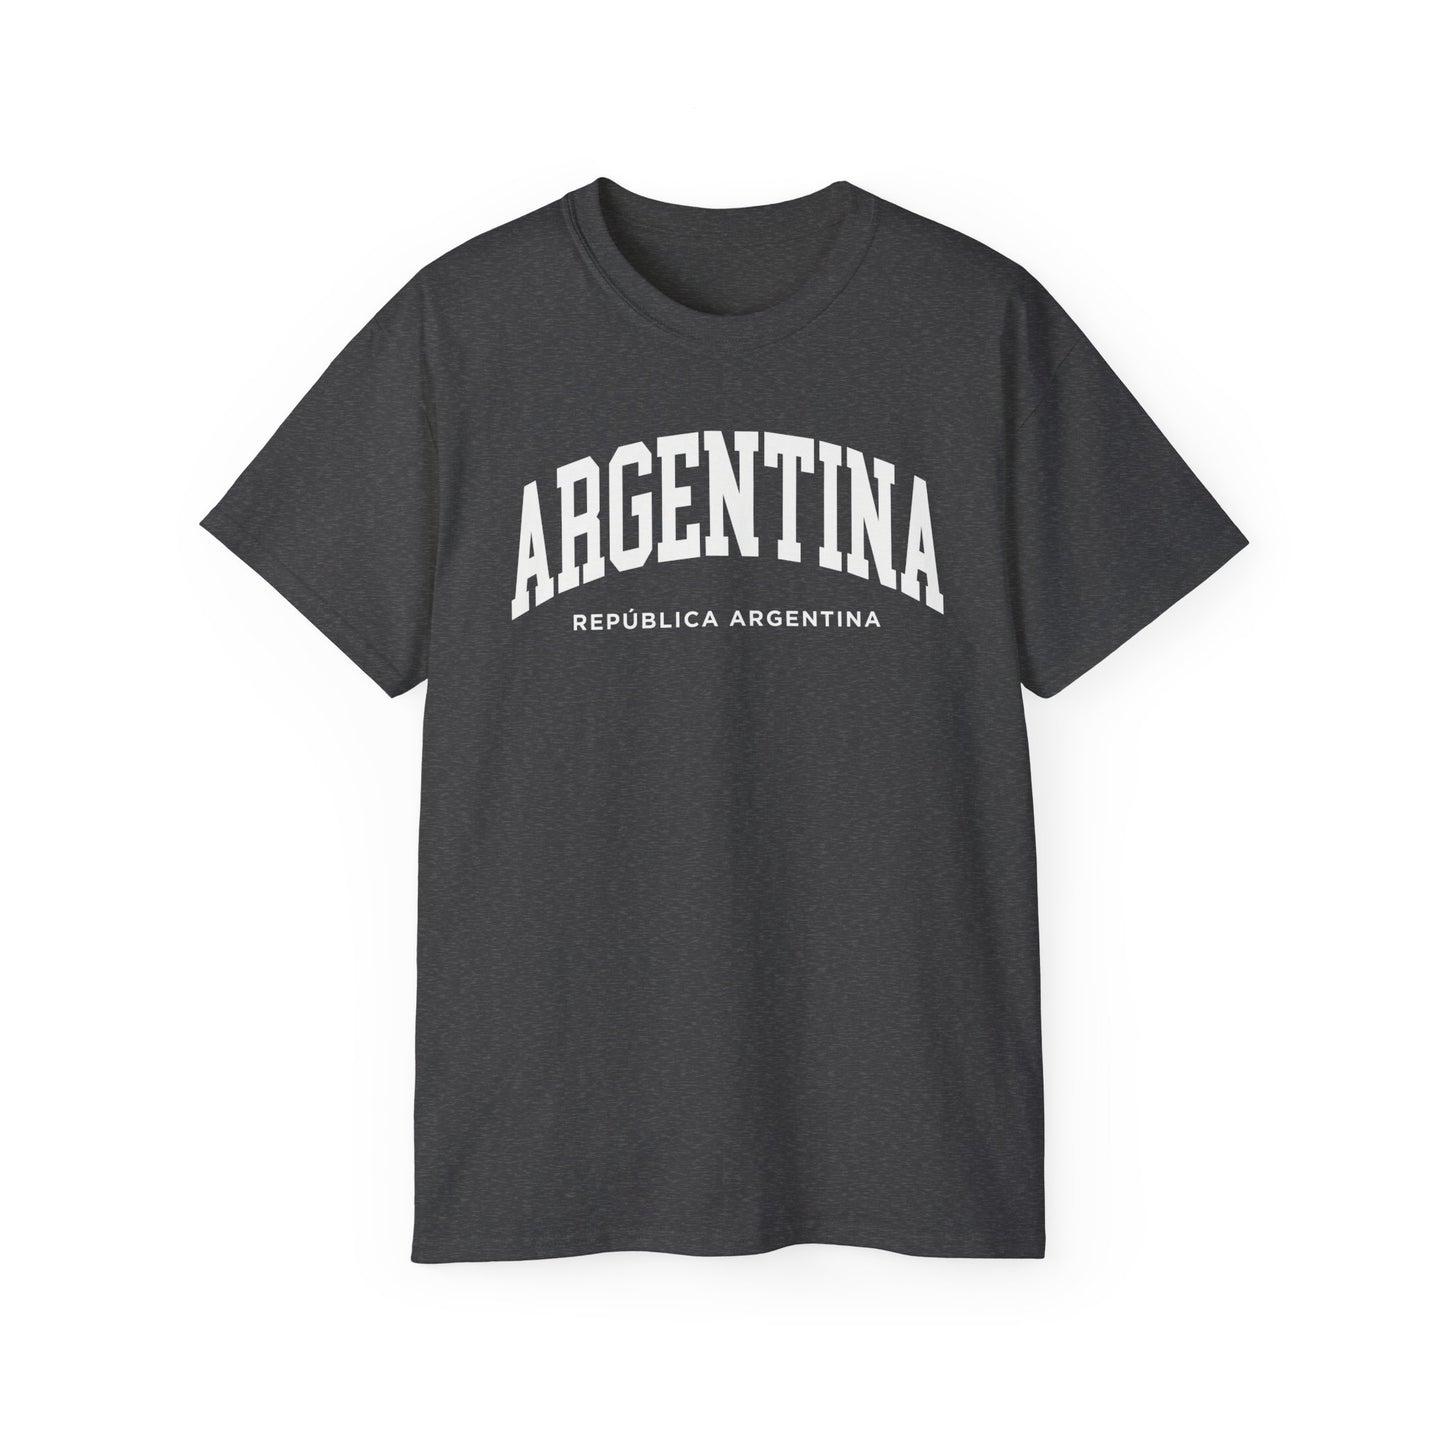 Argentina Tee